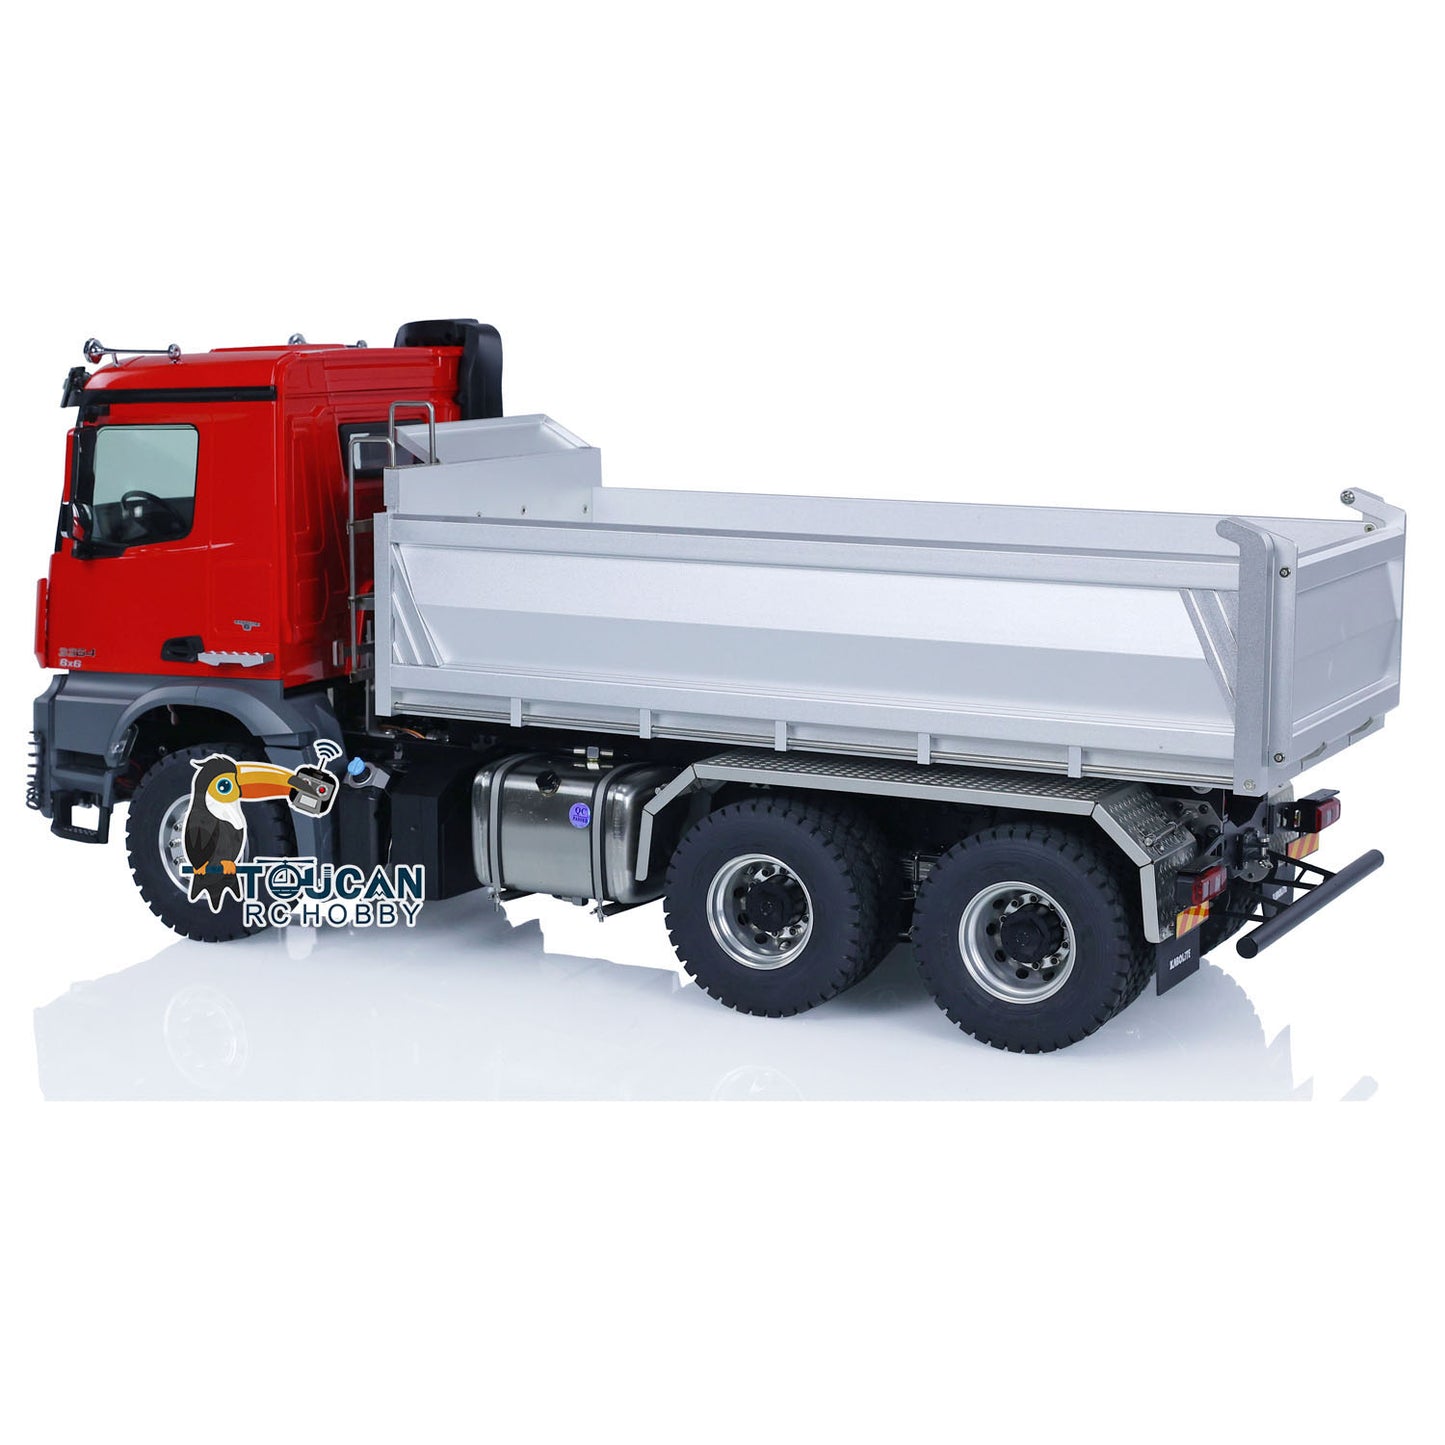 Kabolite 1/14 6*6 RC Metal Hydraulic RTR Dumper Tipper Truck K3364